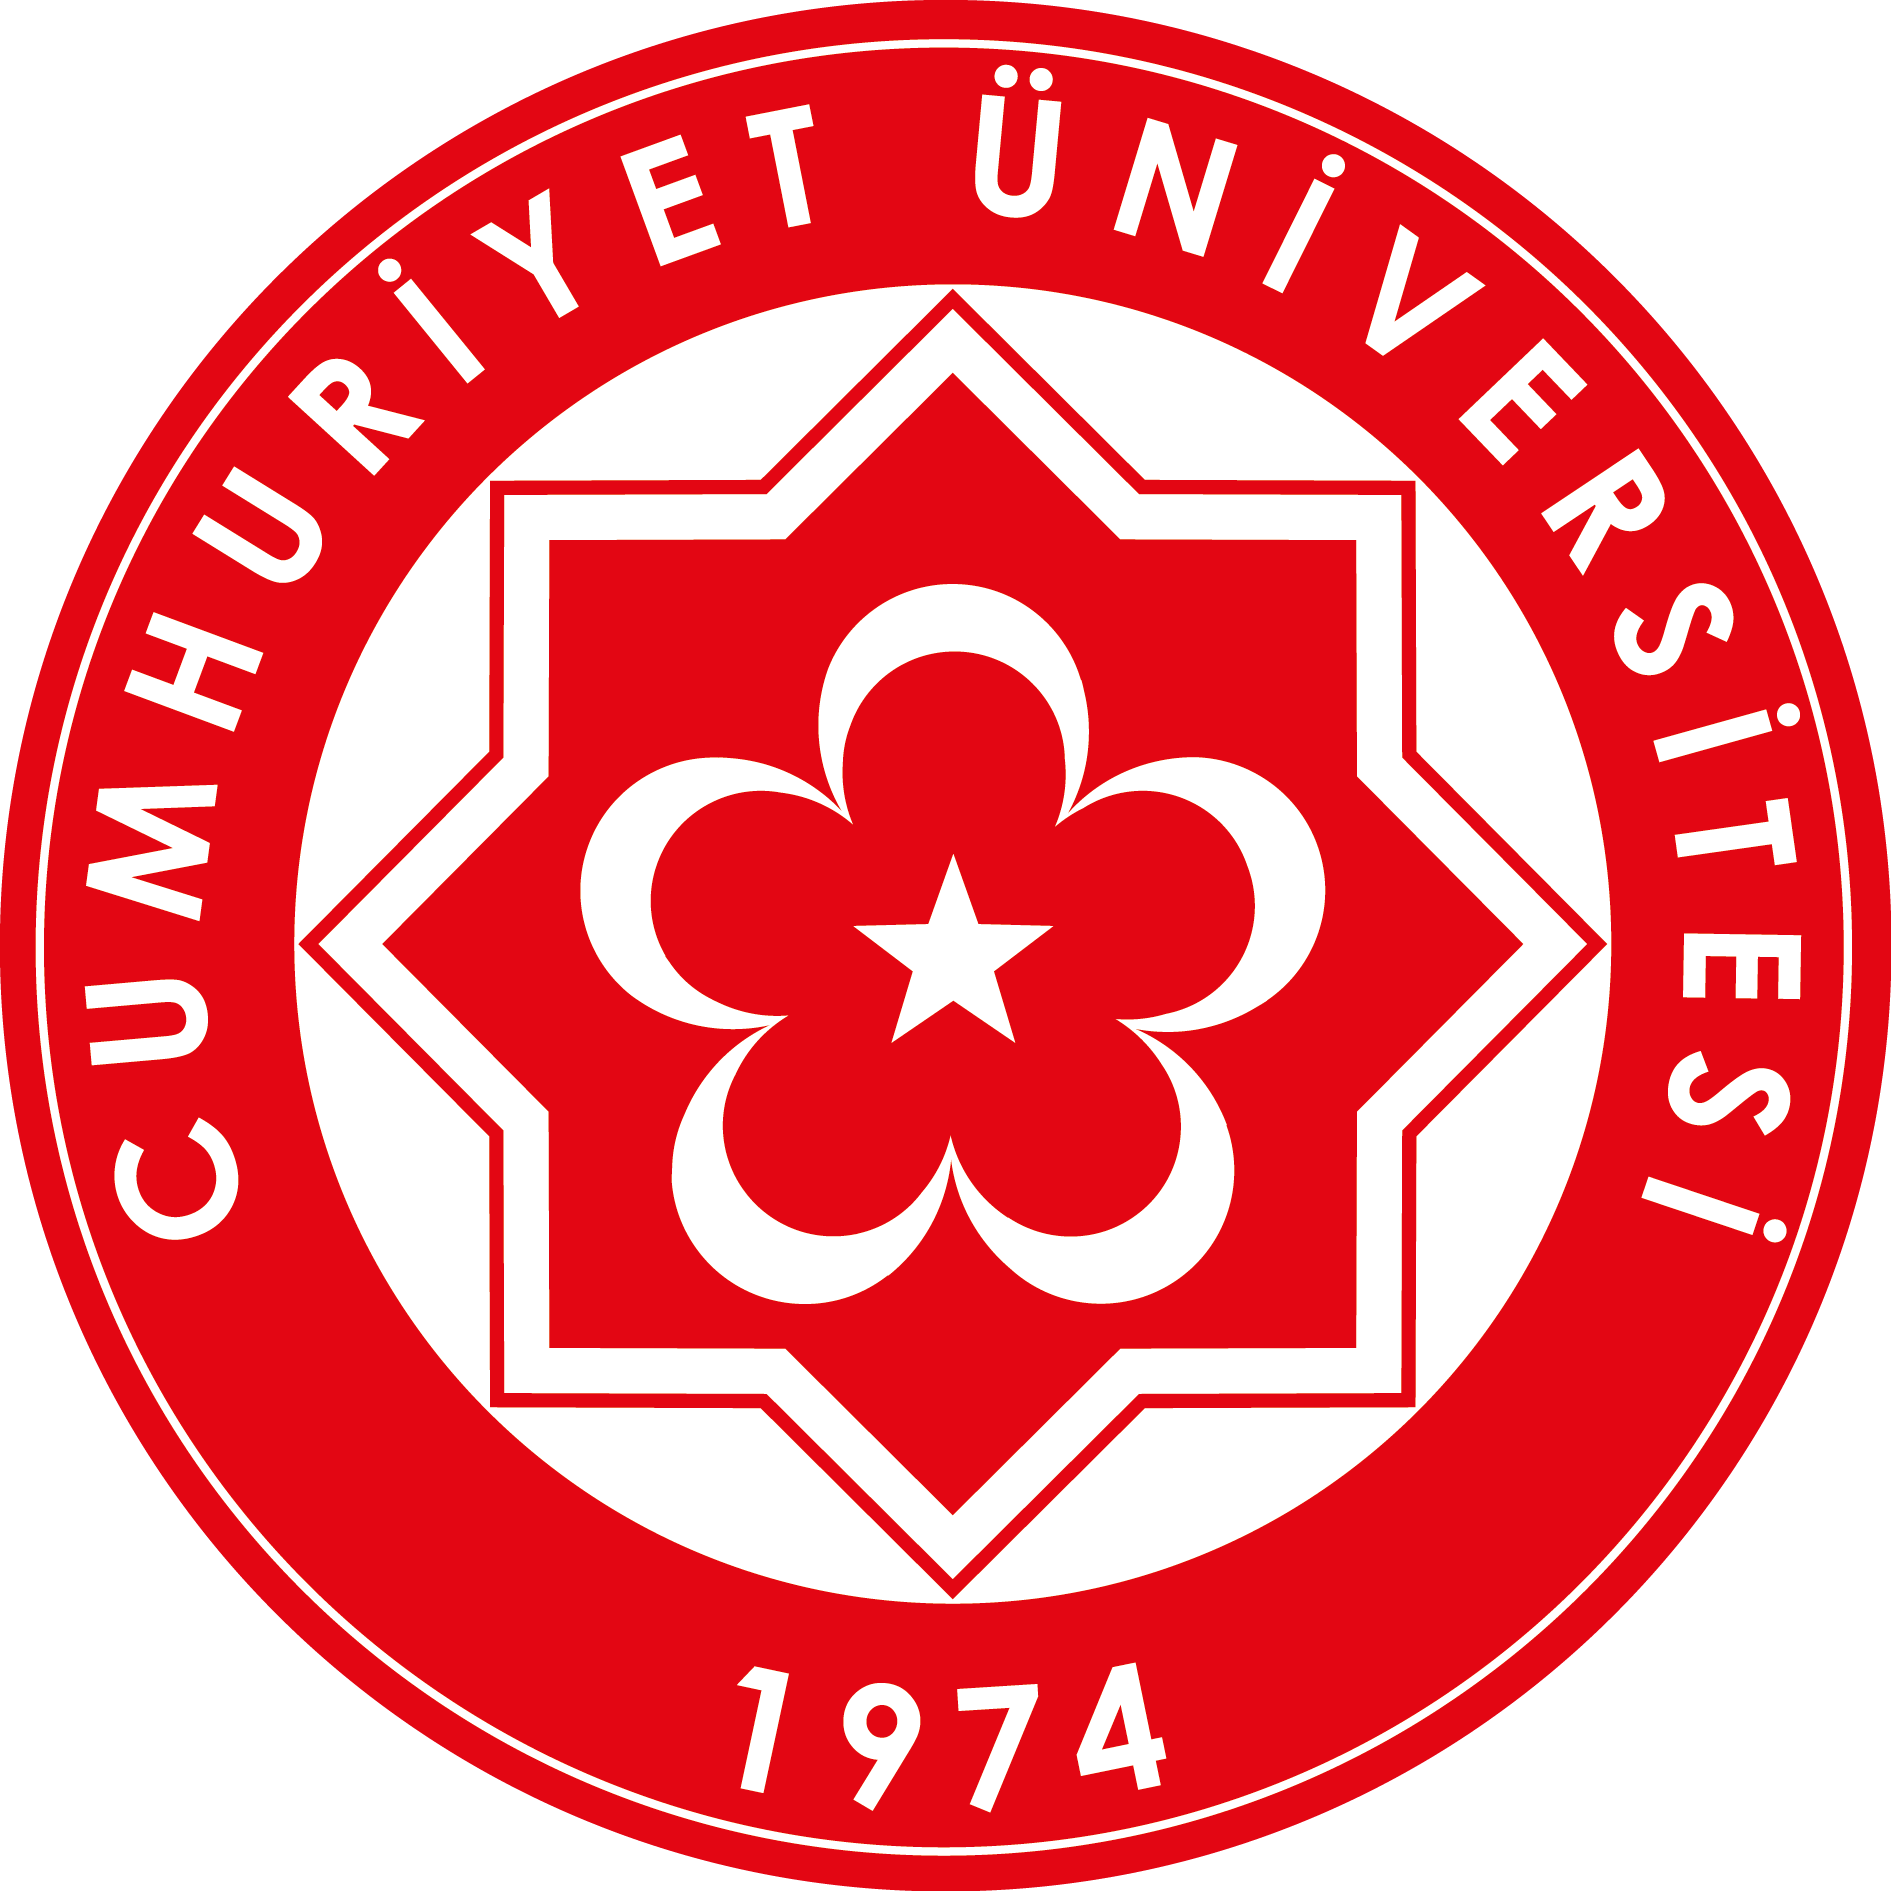 cumhuriyet universitesi logo